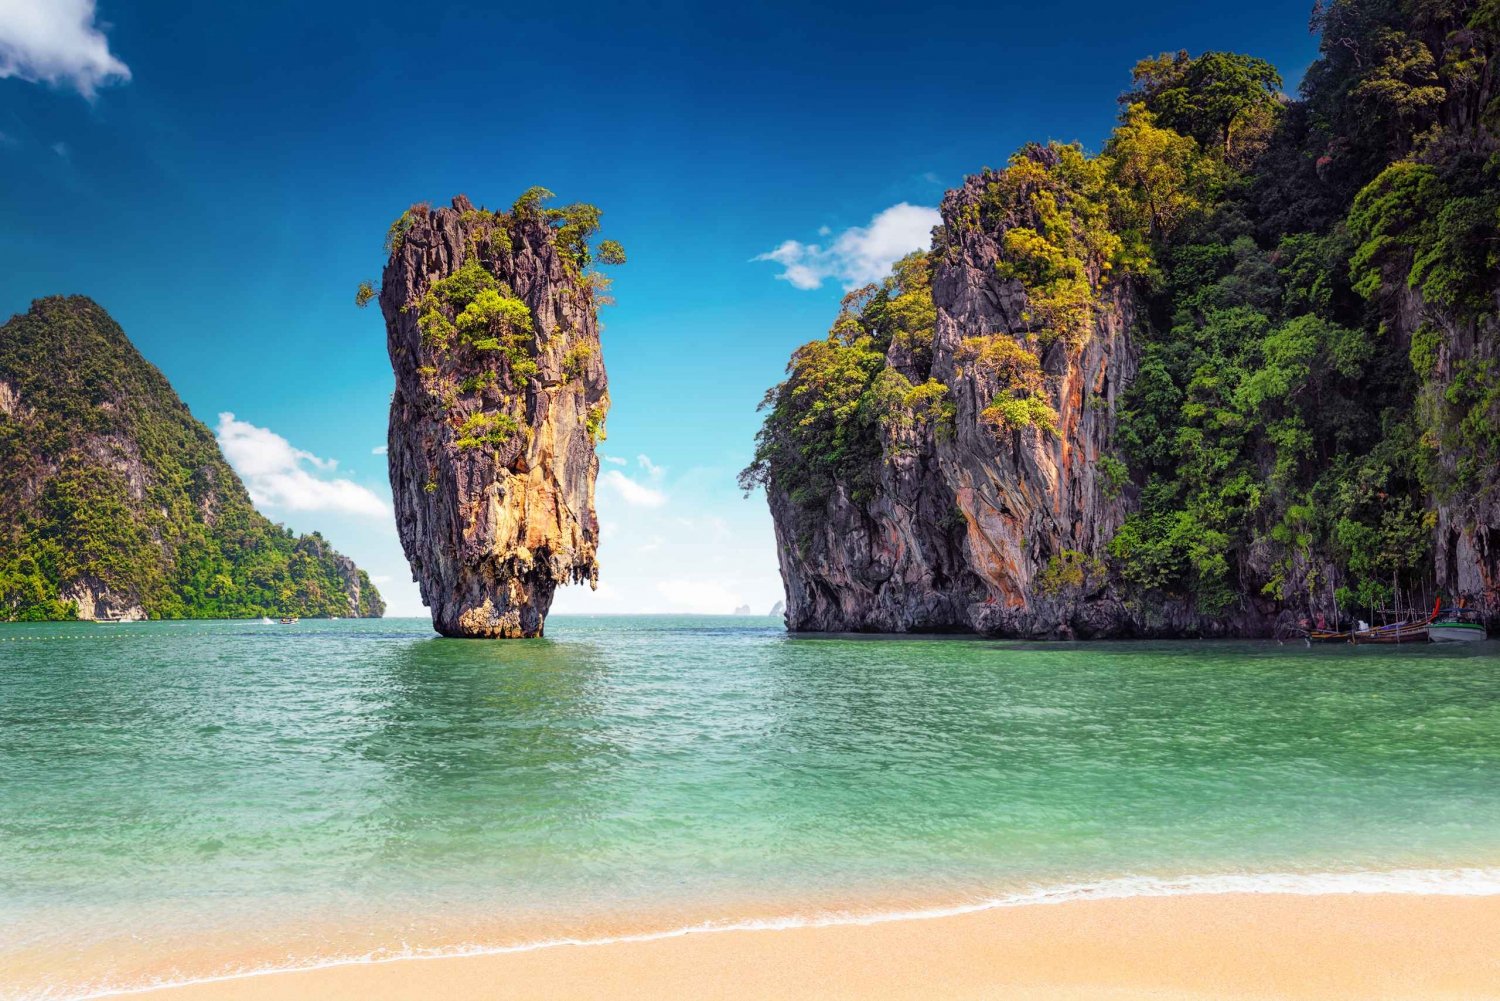 Phuket: James Bond Twilight Sea Canoe and Glowing Plankton